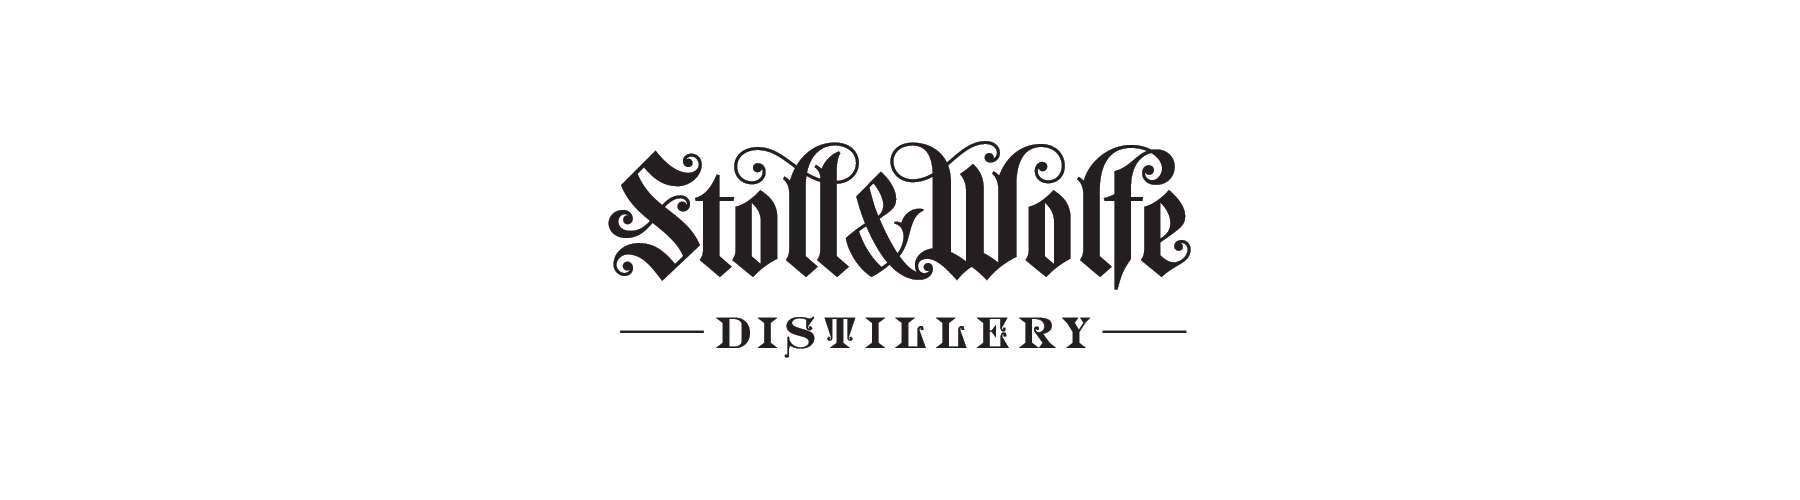 Stoll & Wolfe logo